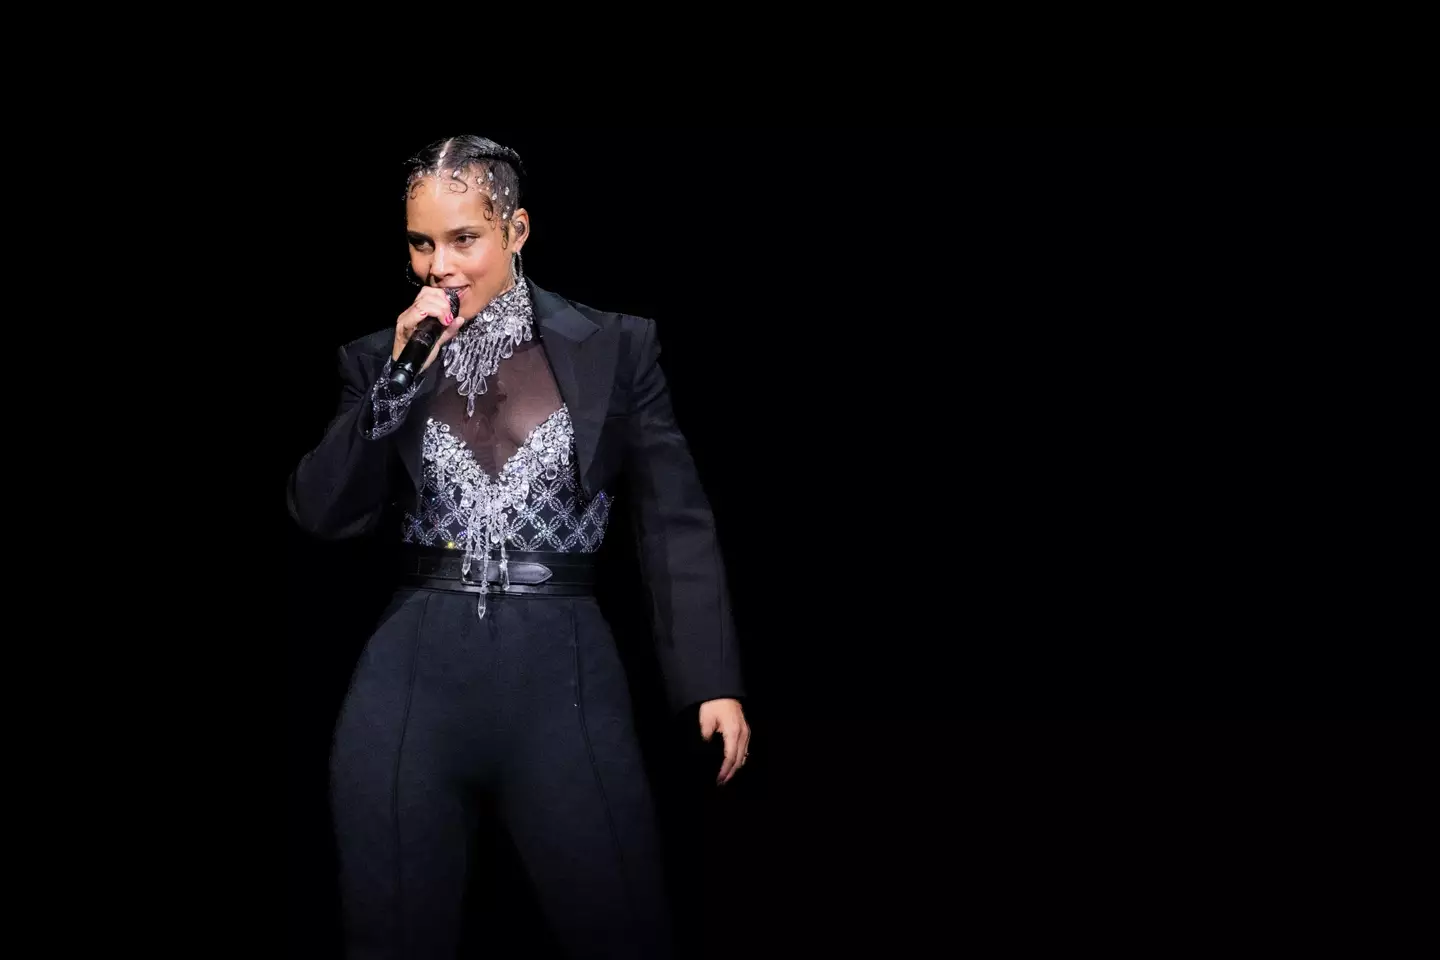 Alicia Keys performing this year at the Mediolanum Forum, Italy.